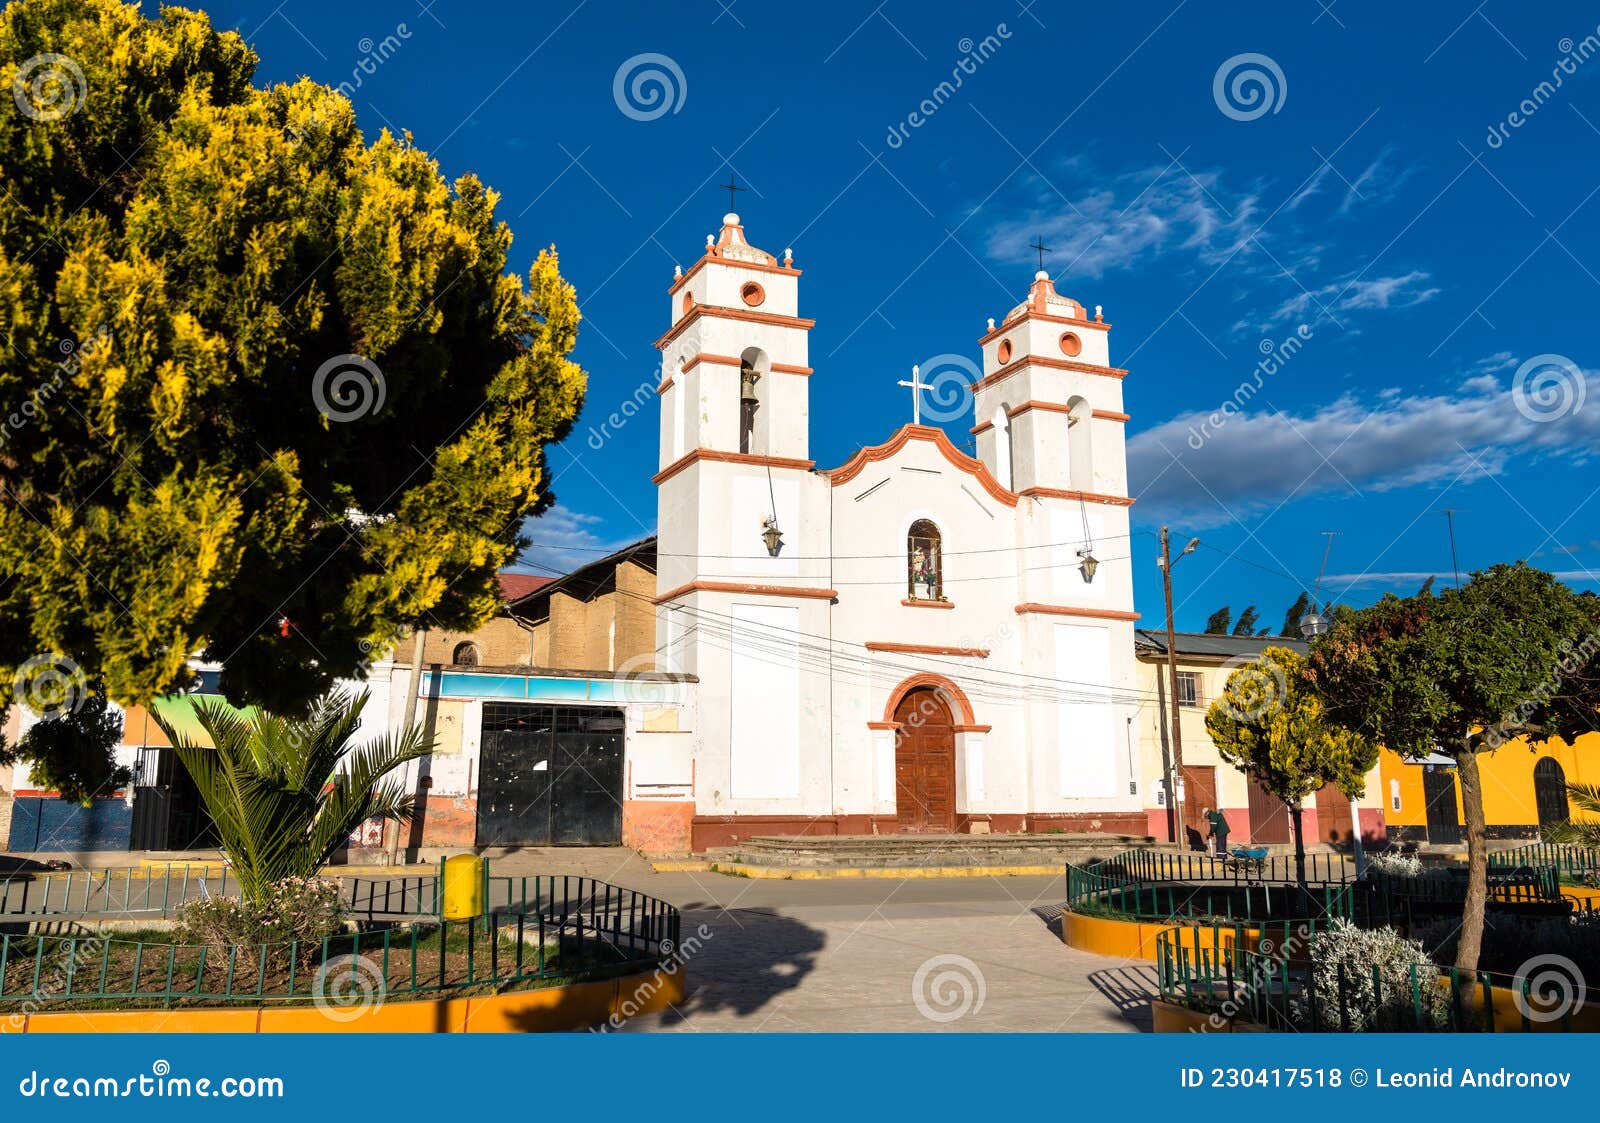 church of santa rosa de ocopa in junin, peru